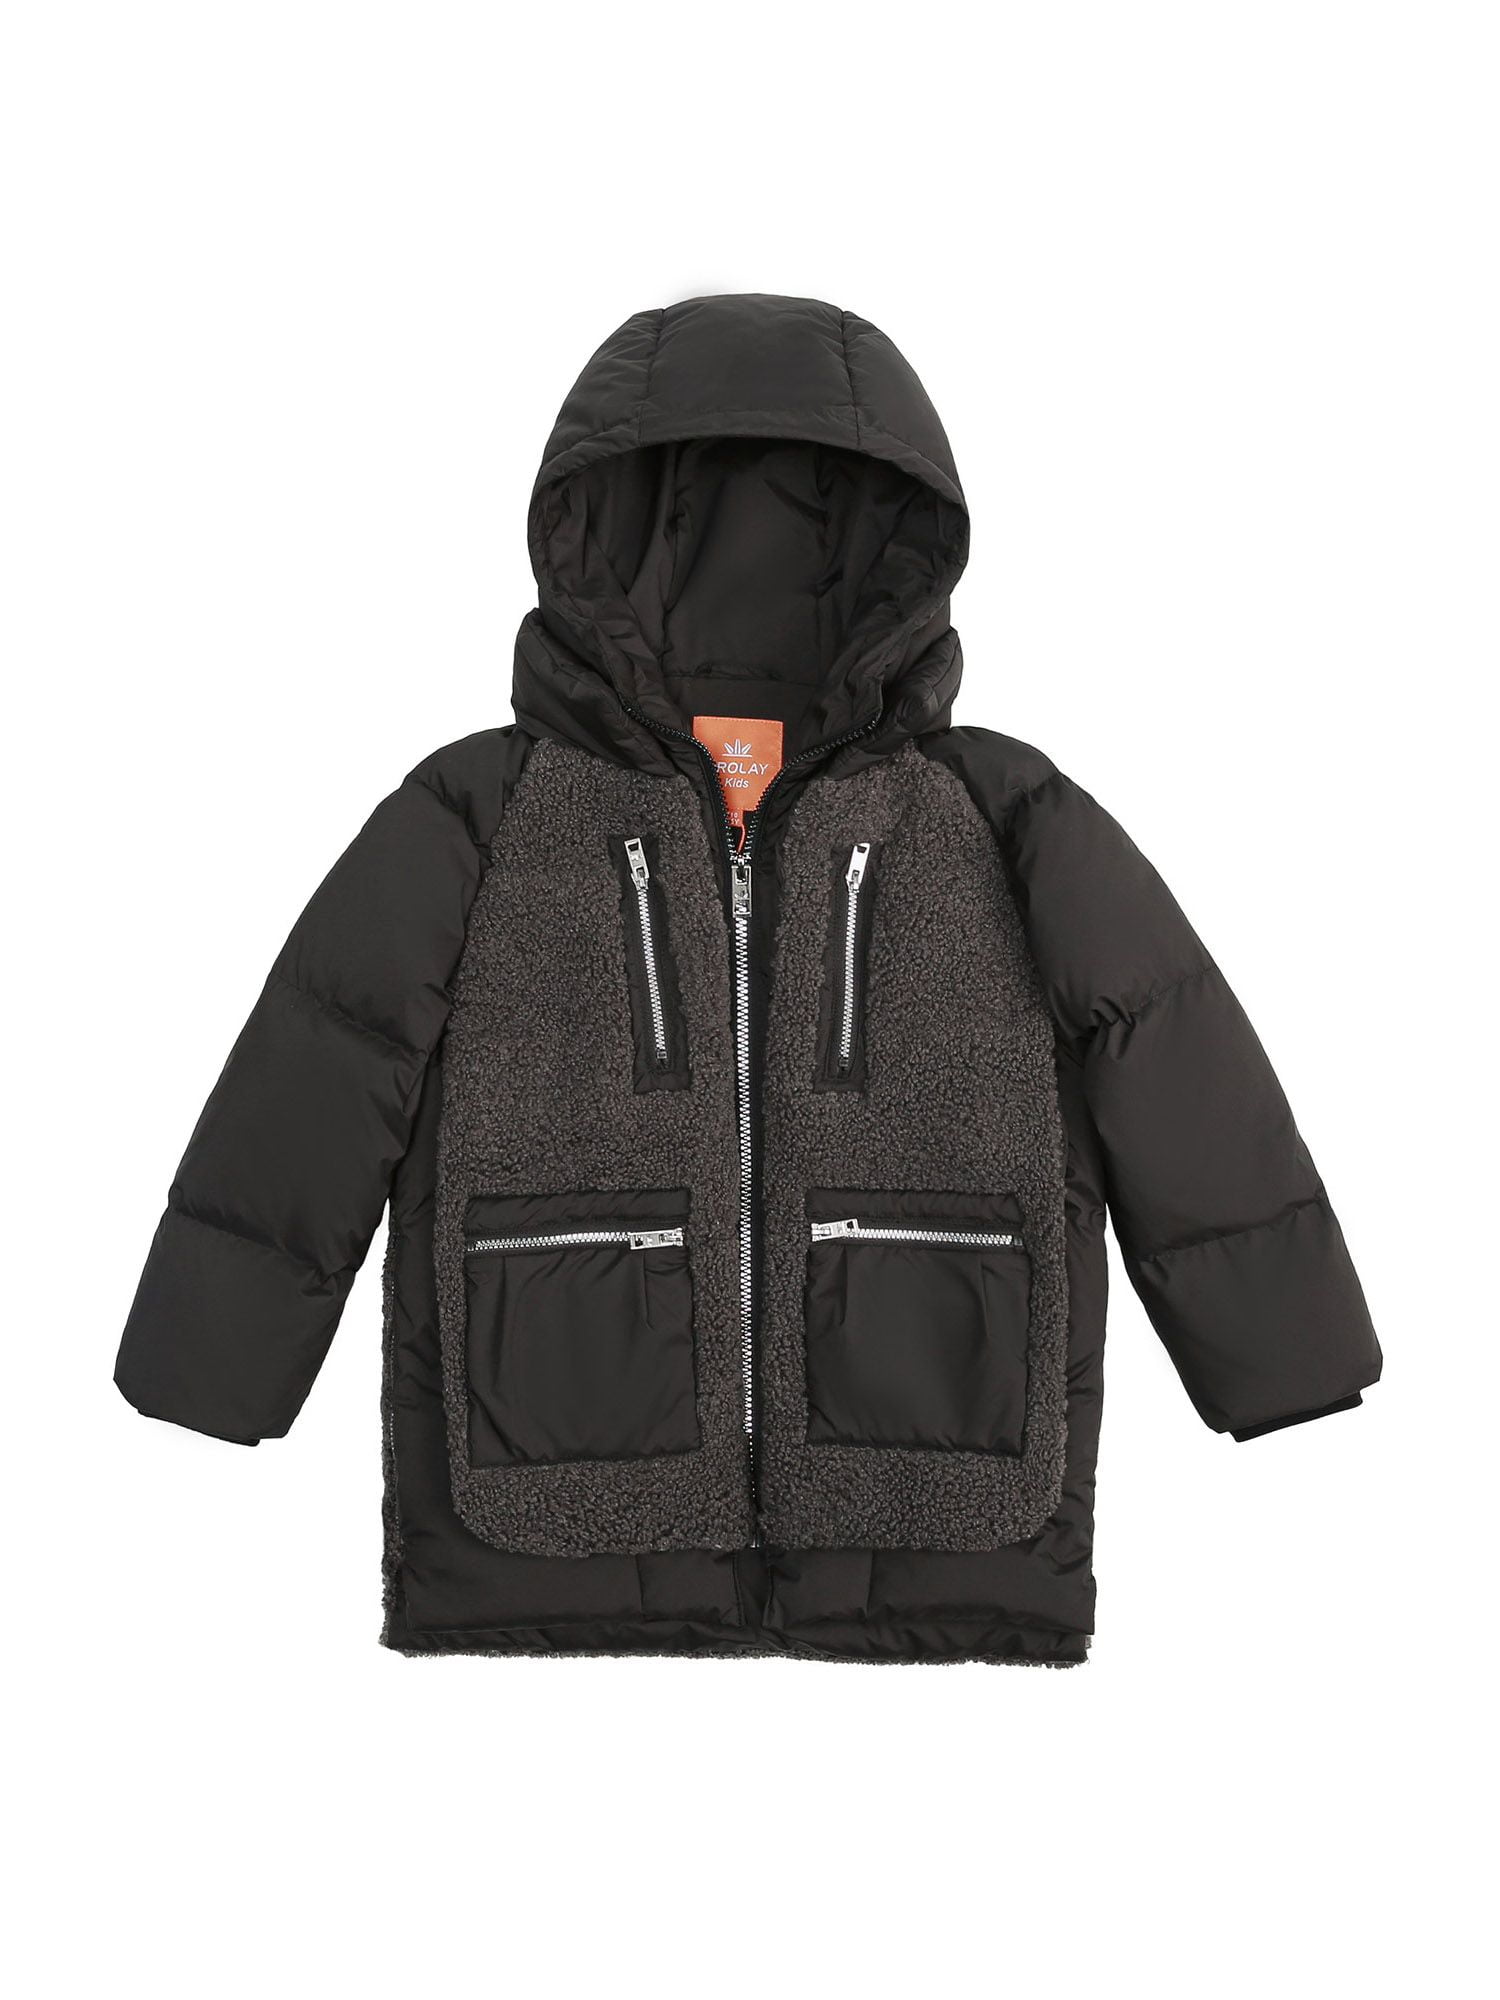 Orolay Children Hooded Down Jacket Girls Packable Puffer Jacket Boys Winter Jackets Warm Parka